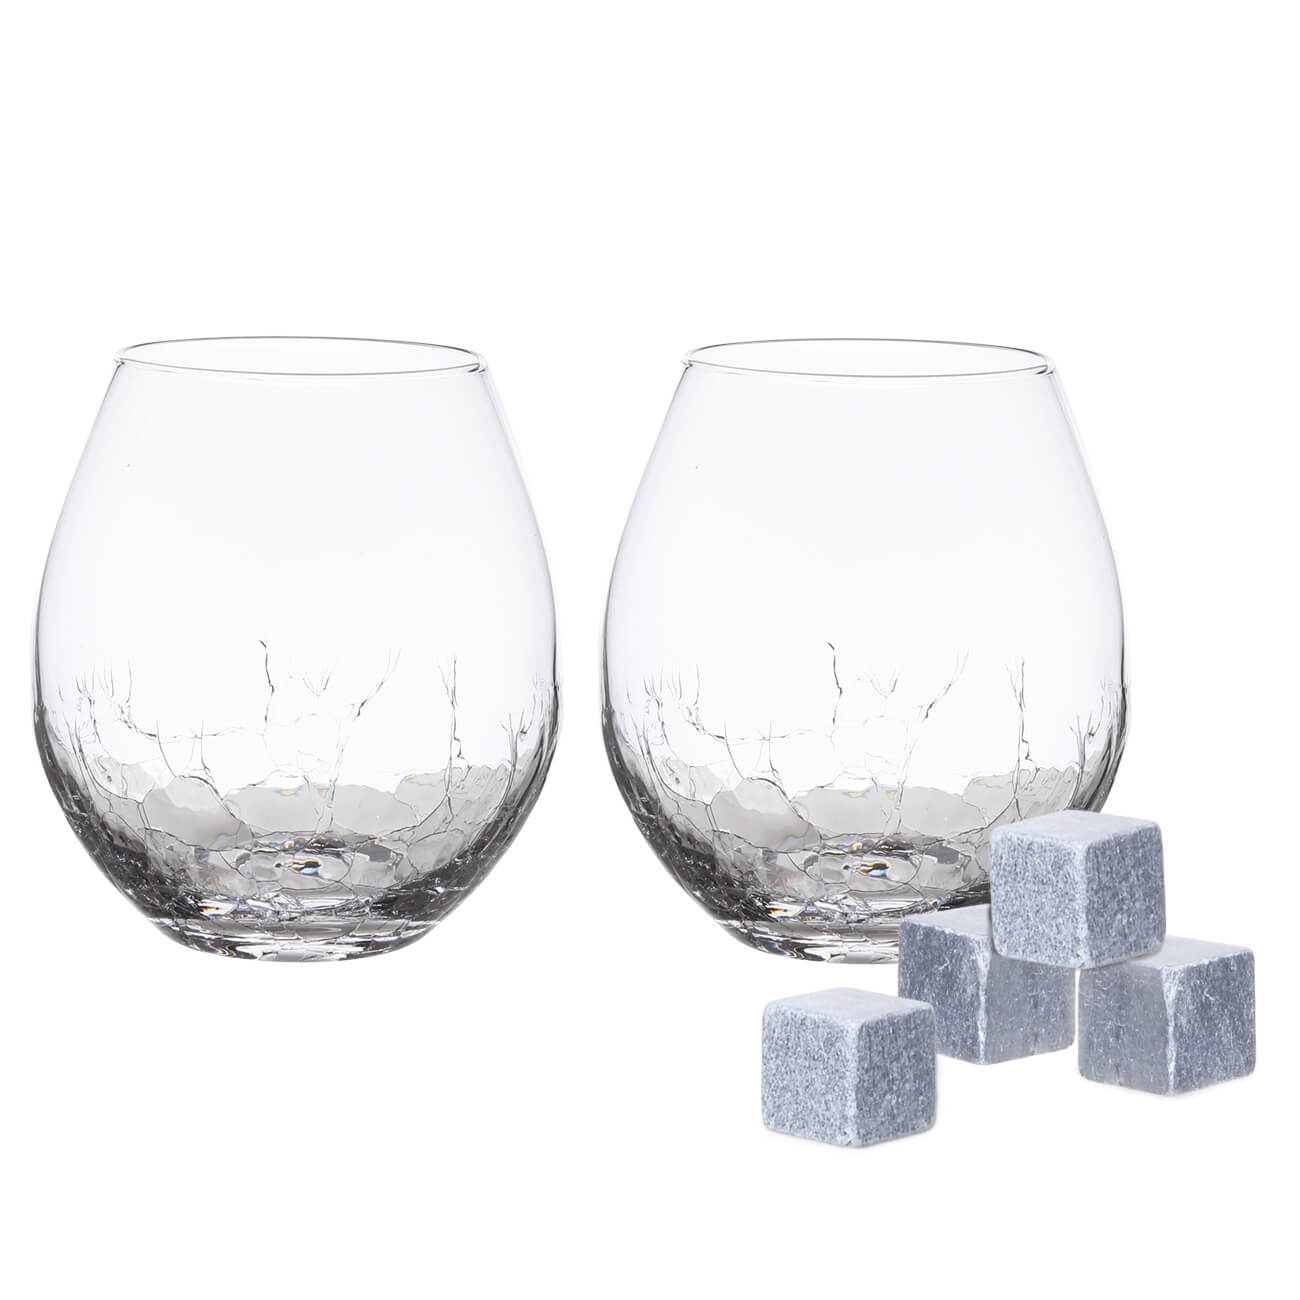 Набор для виски, 2 перс, 6 пр, стаканы/кубики, стекло/стеатит, Кракелюр, Ice iq кубики